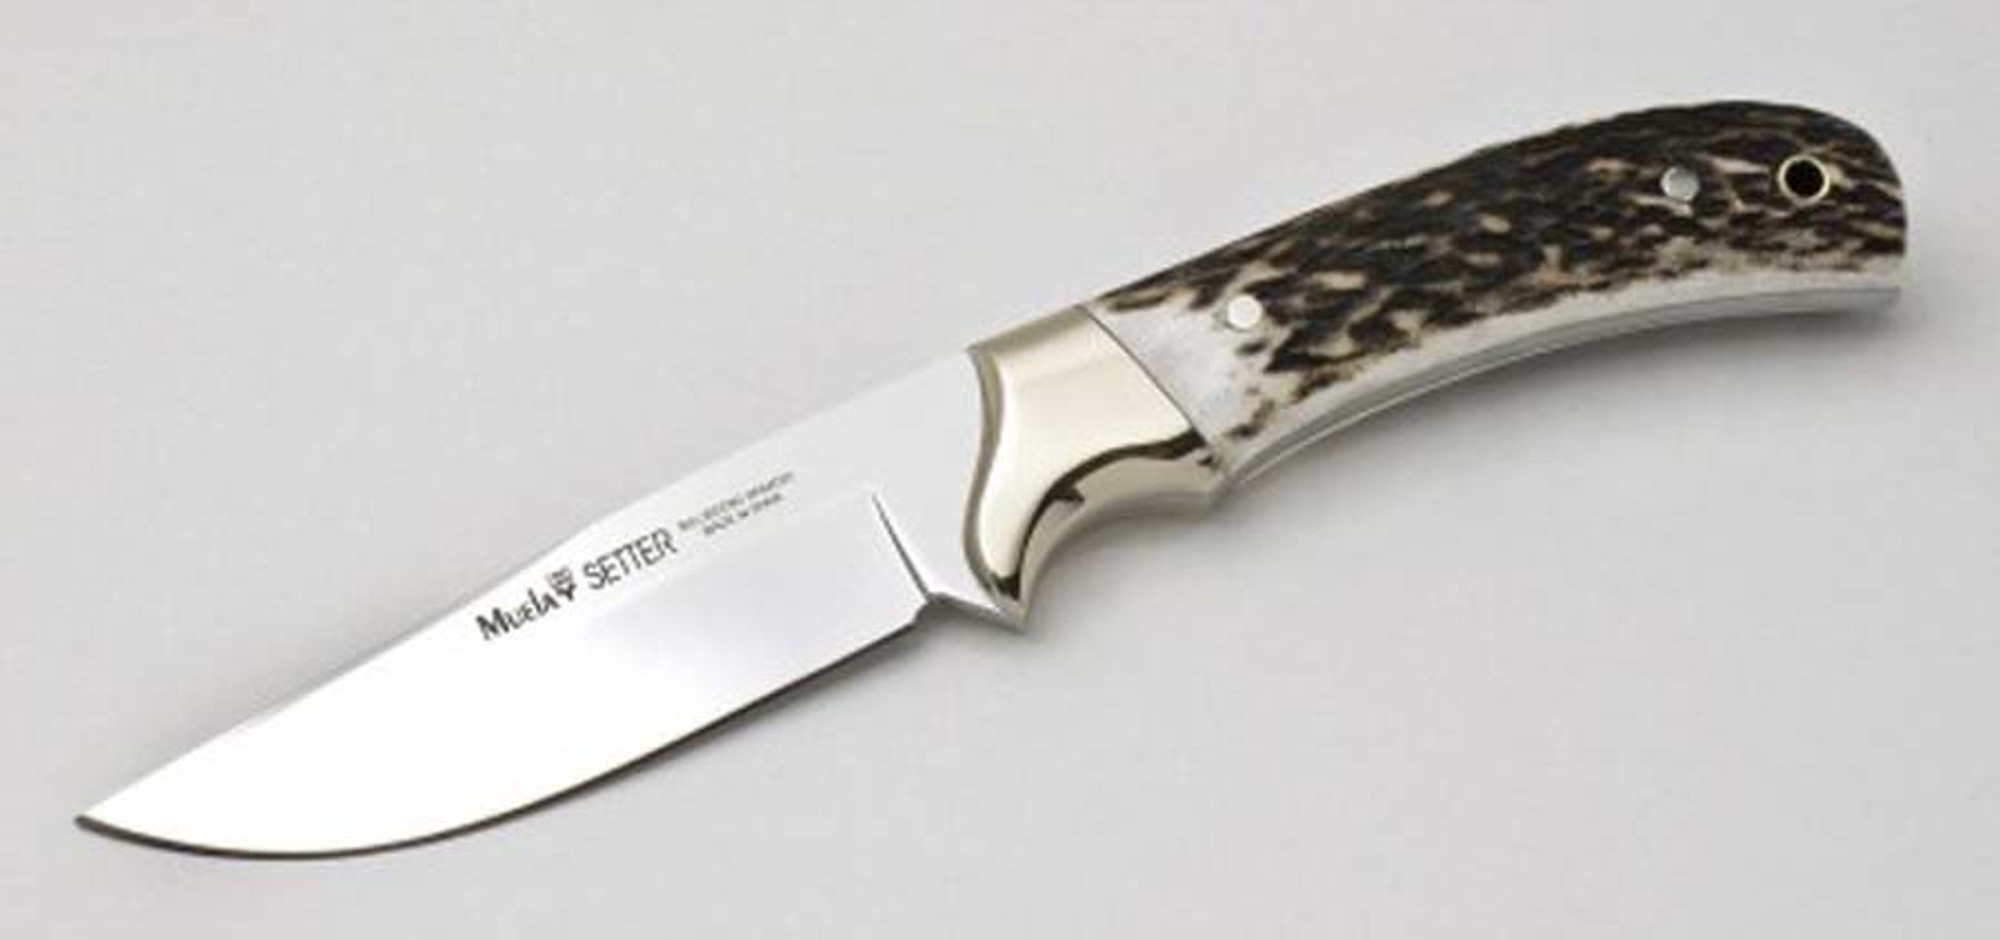 MUELA SETTER-11A, X50CrMoV15, 4-3/8" Fixed Blade Hunting Knife, Deer Horn Handle